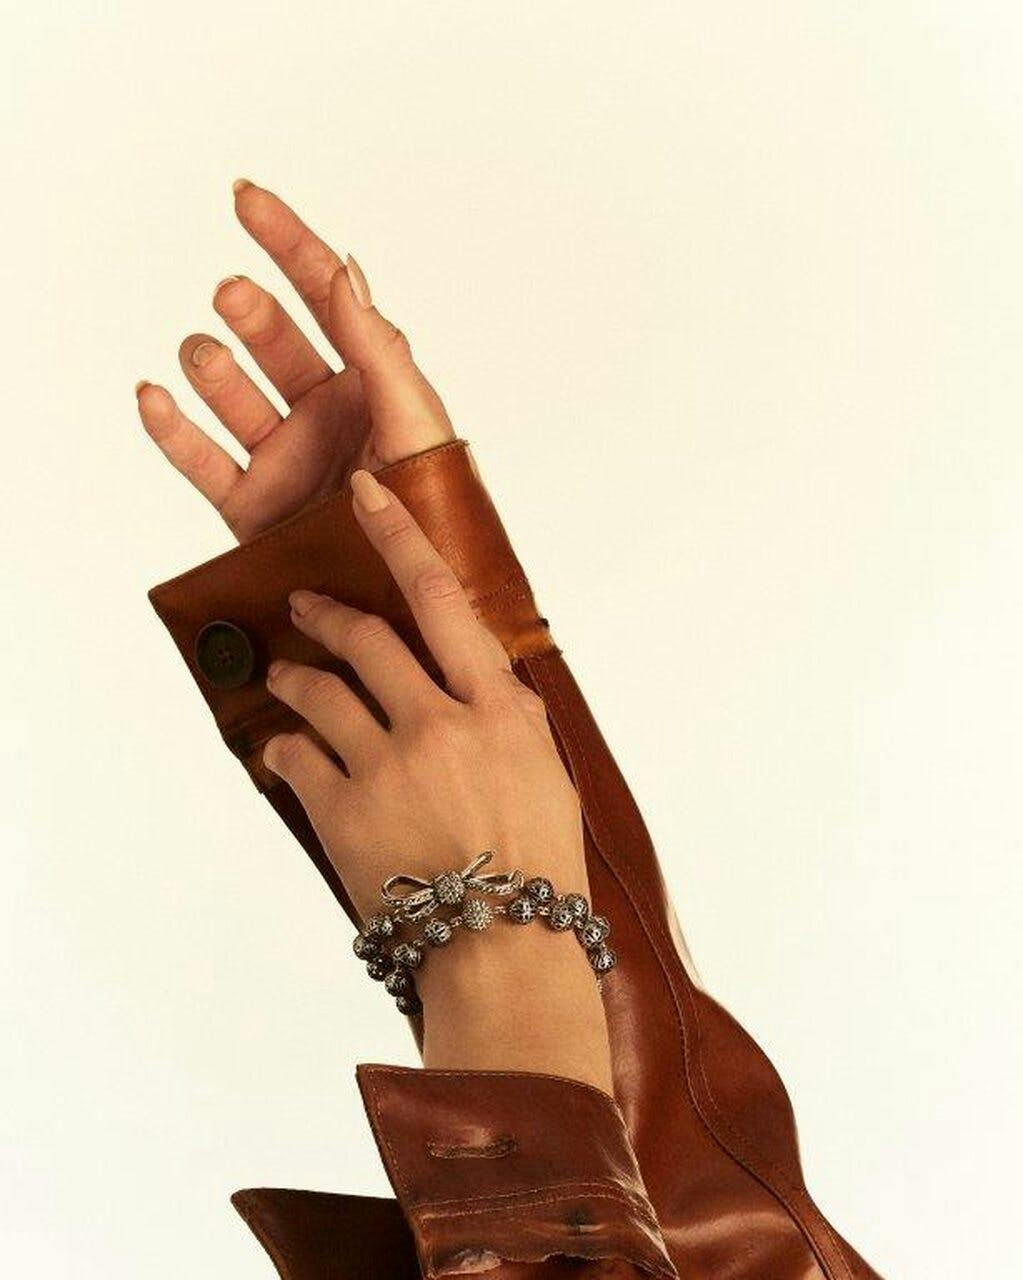 body part finger hand person wrist accessories bracelet jewelry cuff